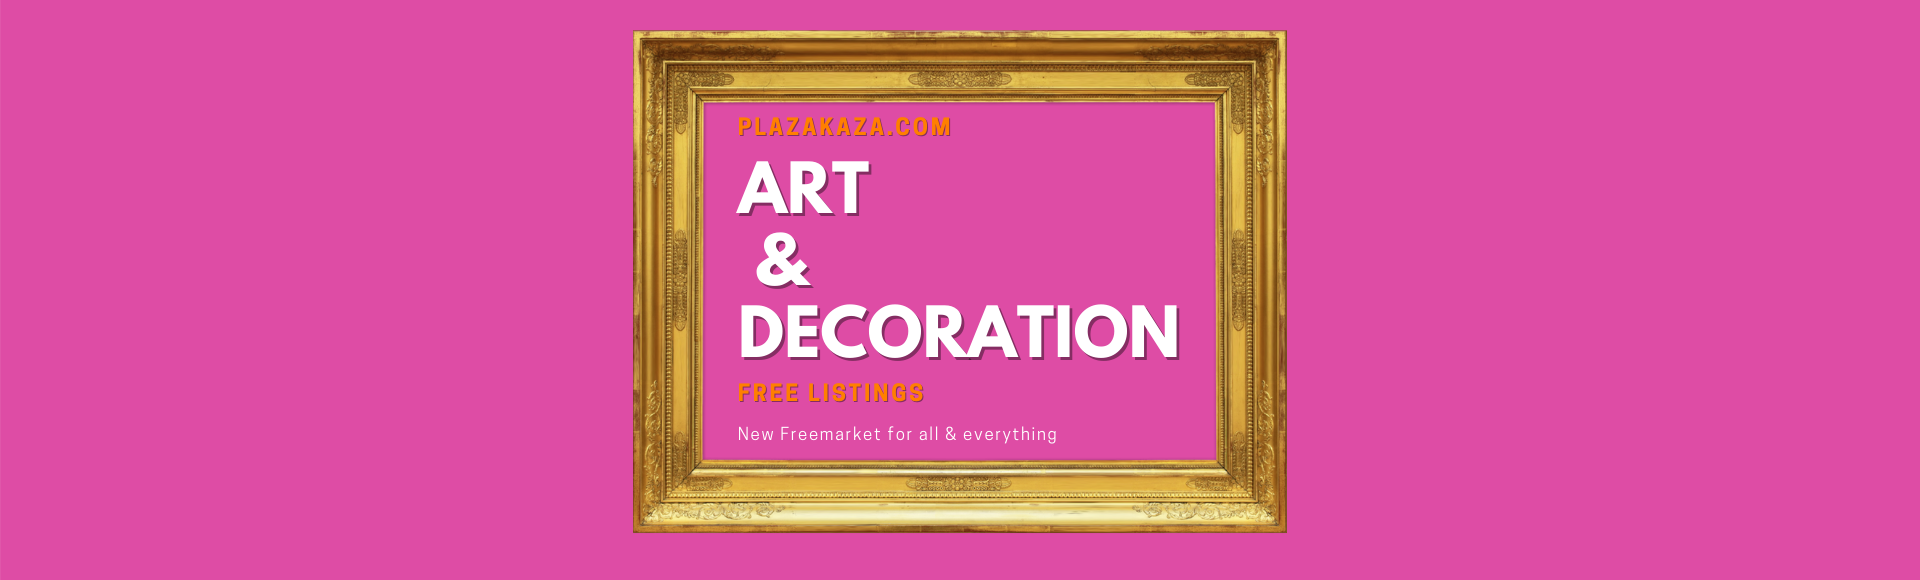 art & decoration